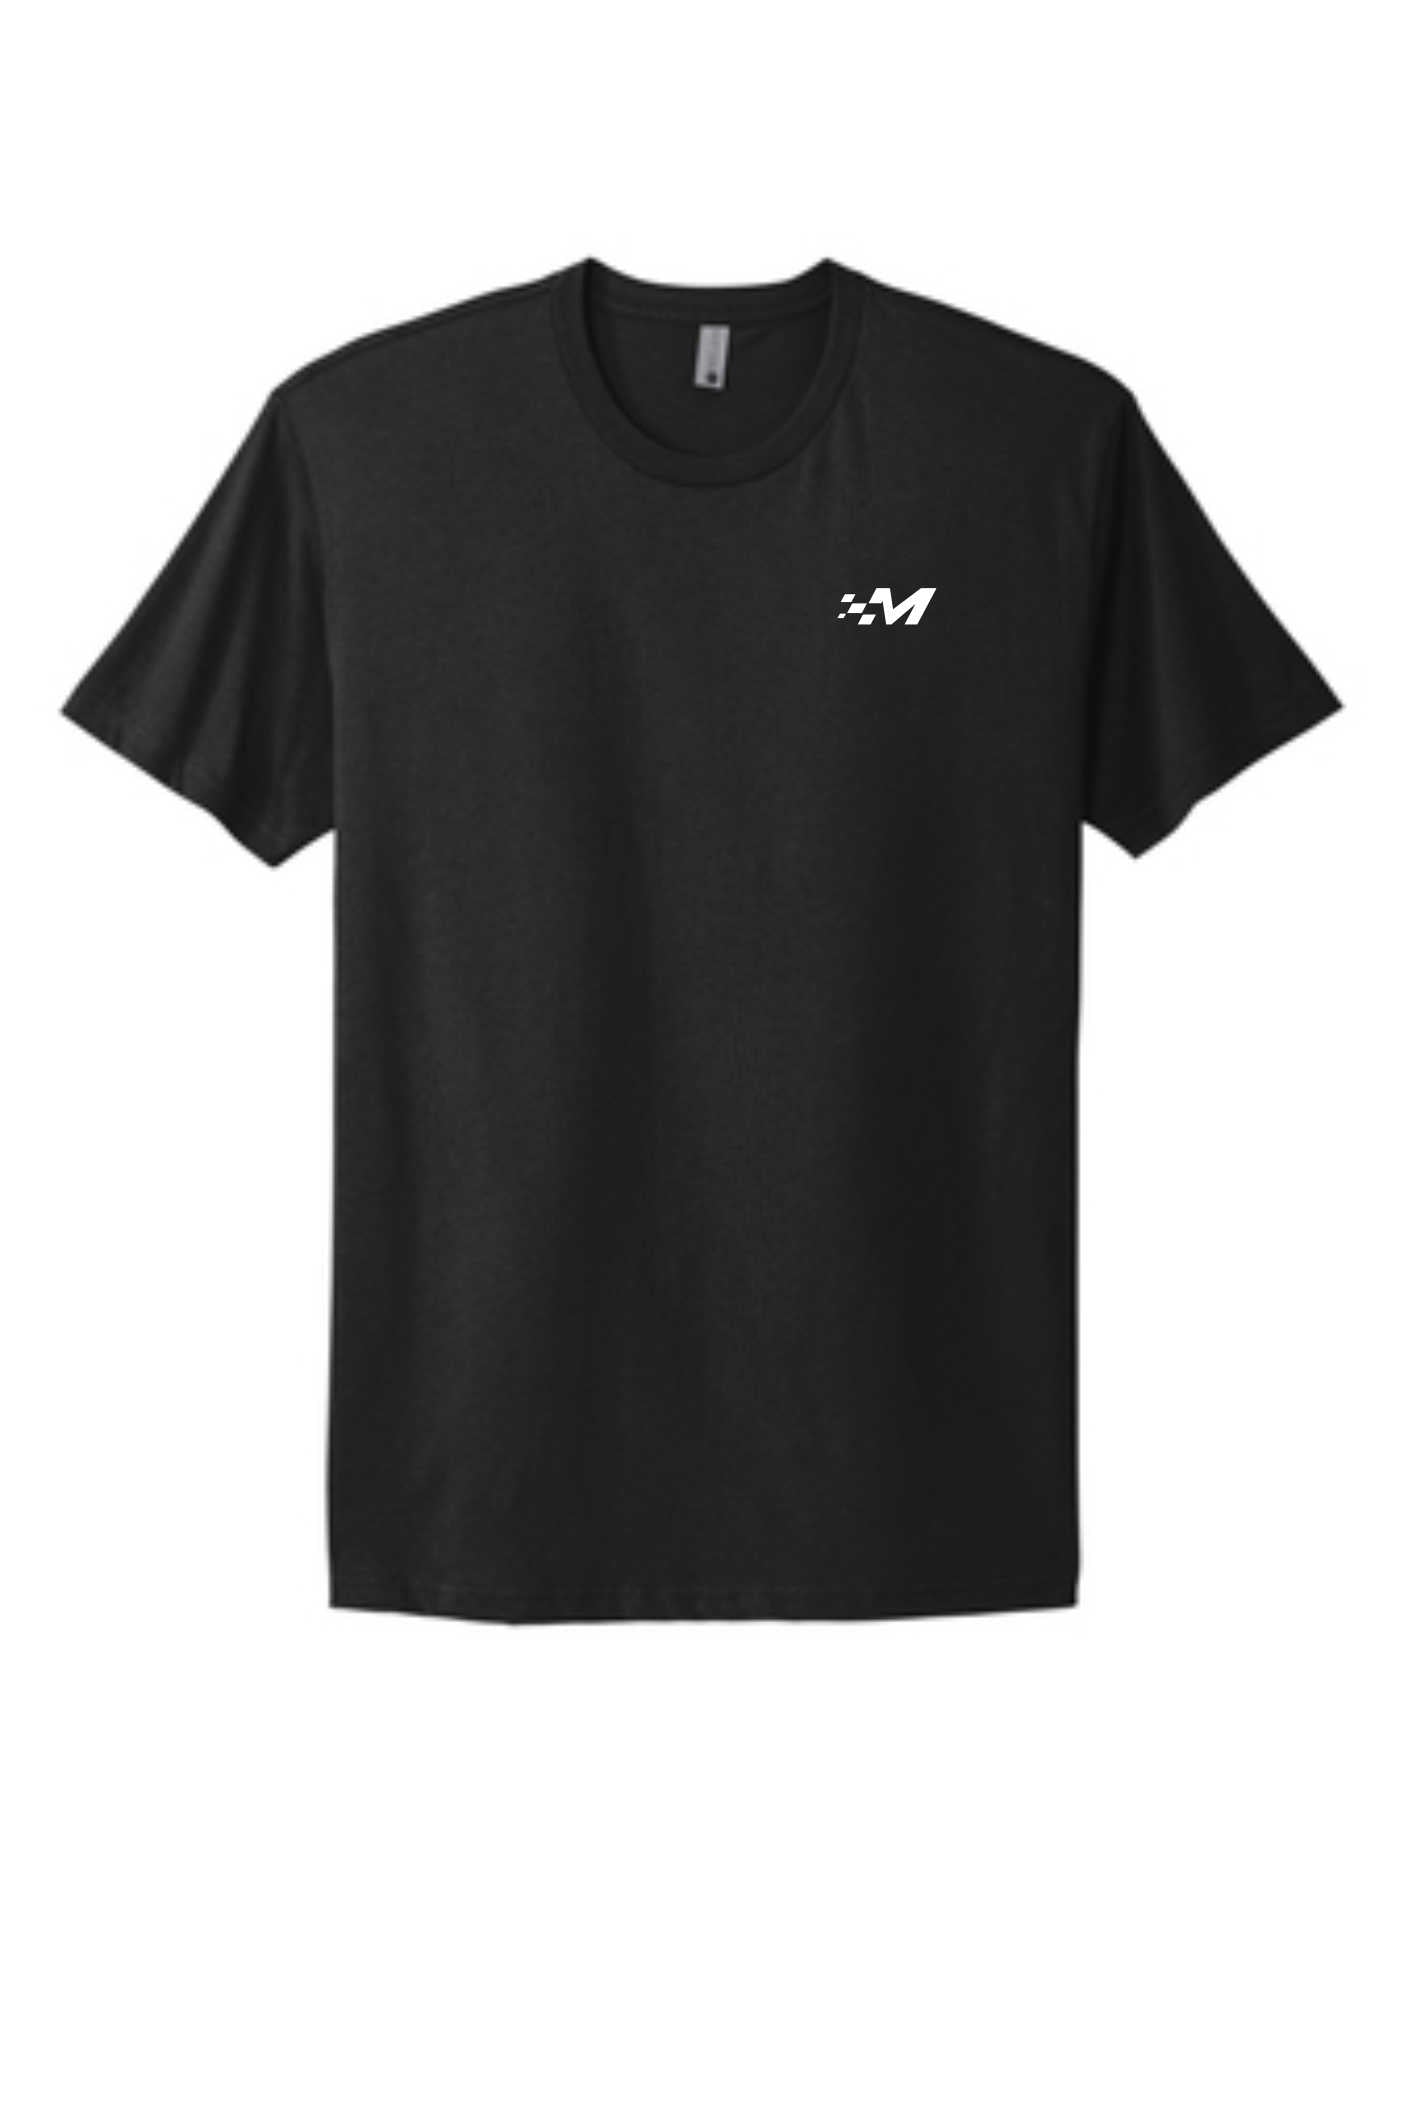 E92 M3 "Generations" - Short Sleeve T-Shirt - Black